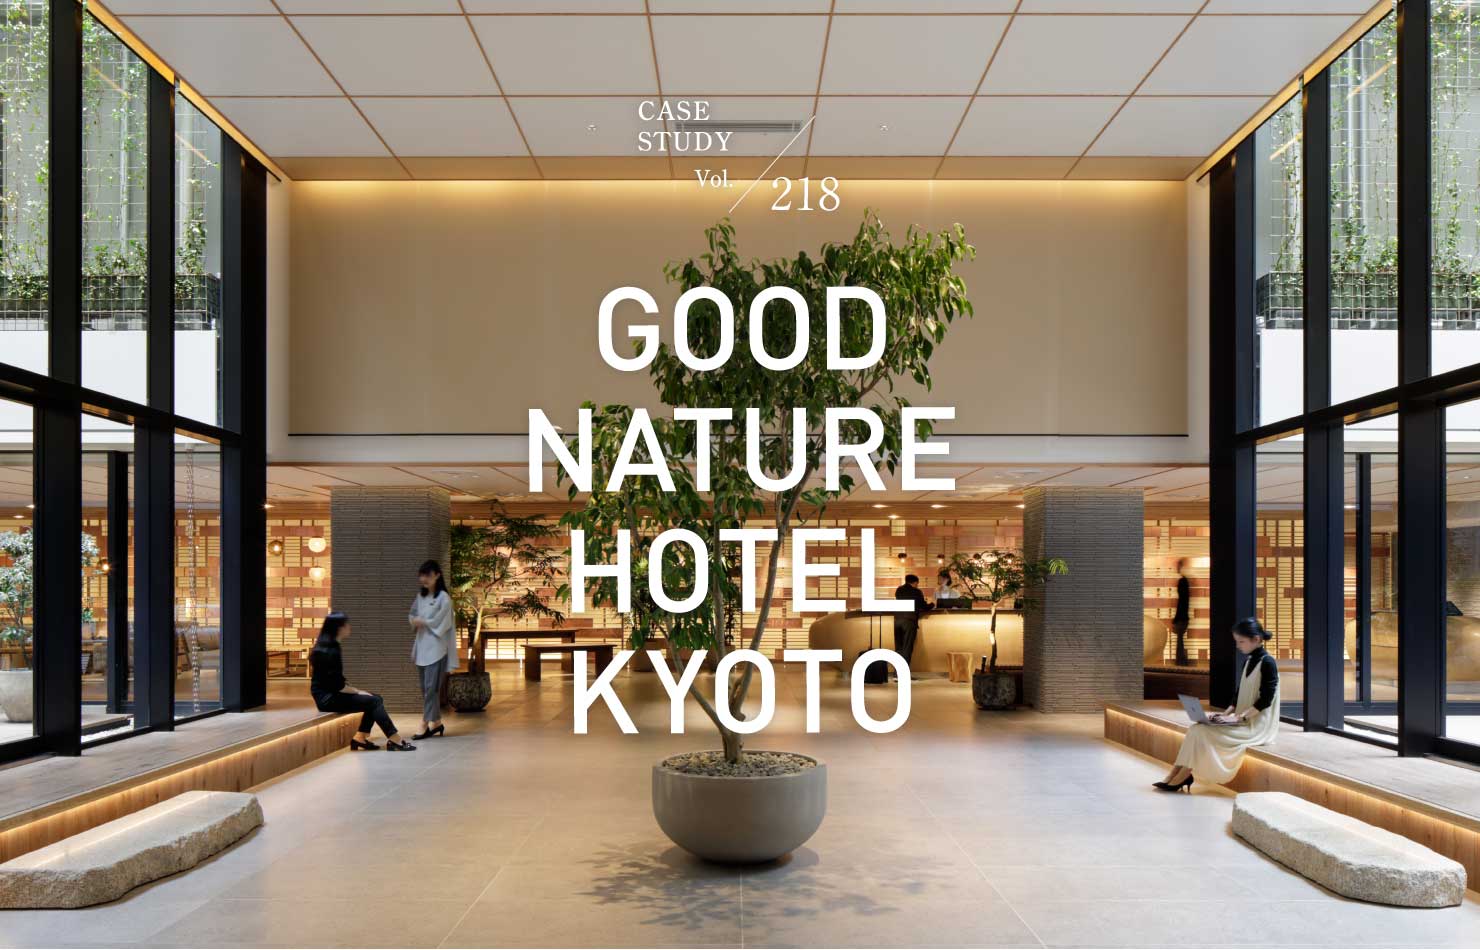 CASE STUDY Vol.218 GOOD NATURE HOTEL KYOTO